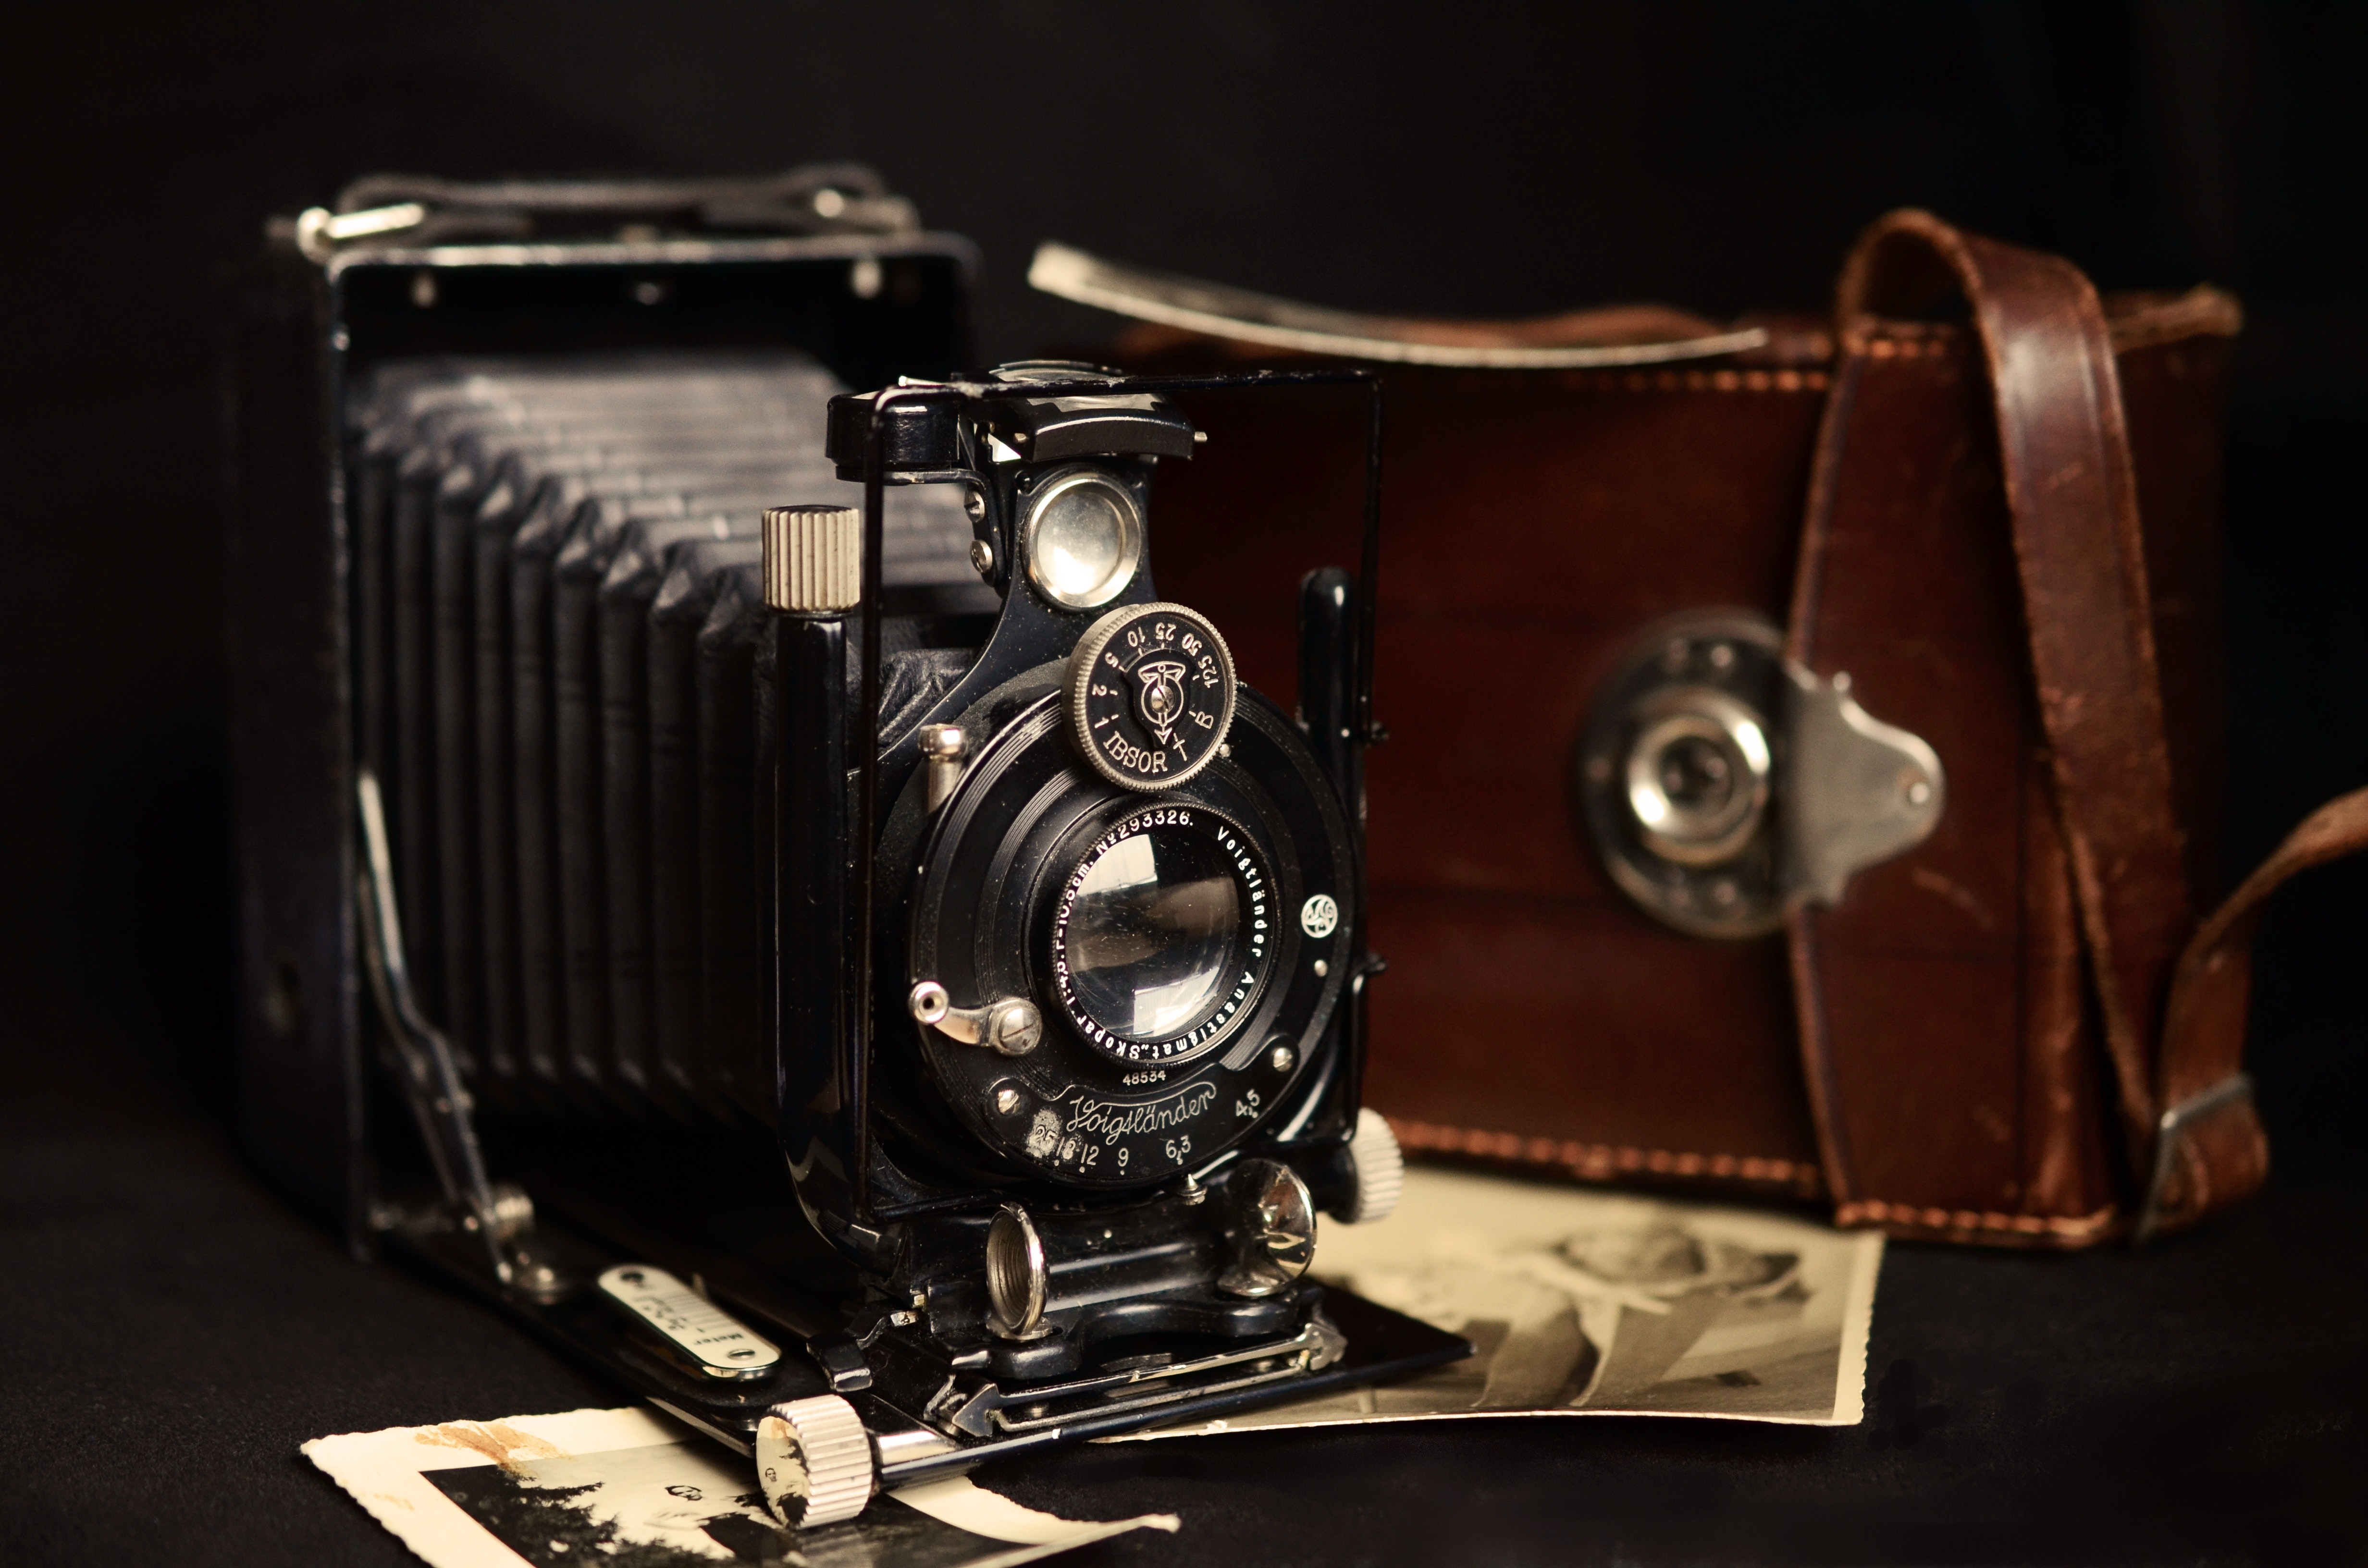 Black Classic Camera Near Brown Leather Bag · Free Stock Photo